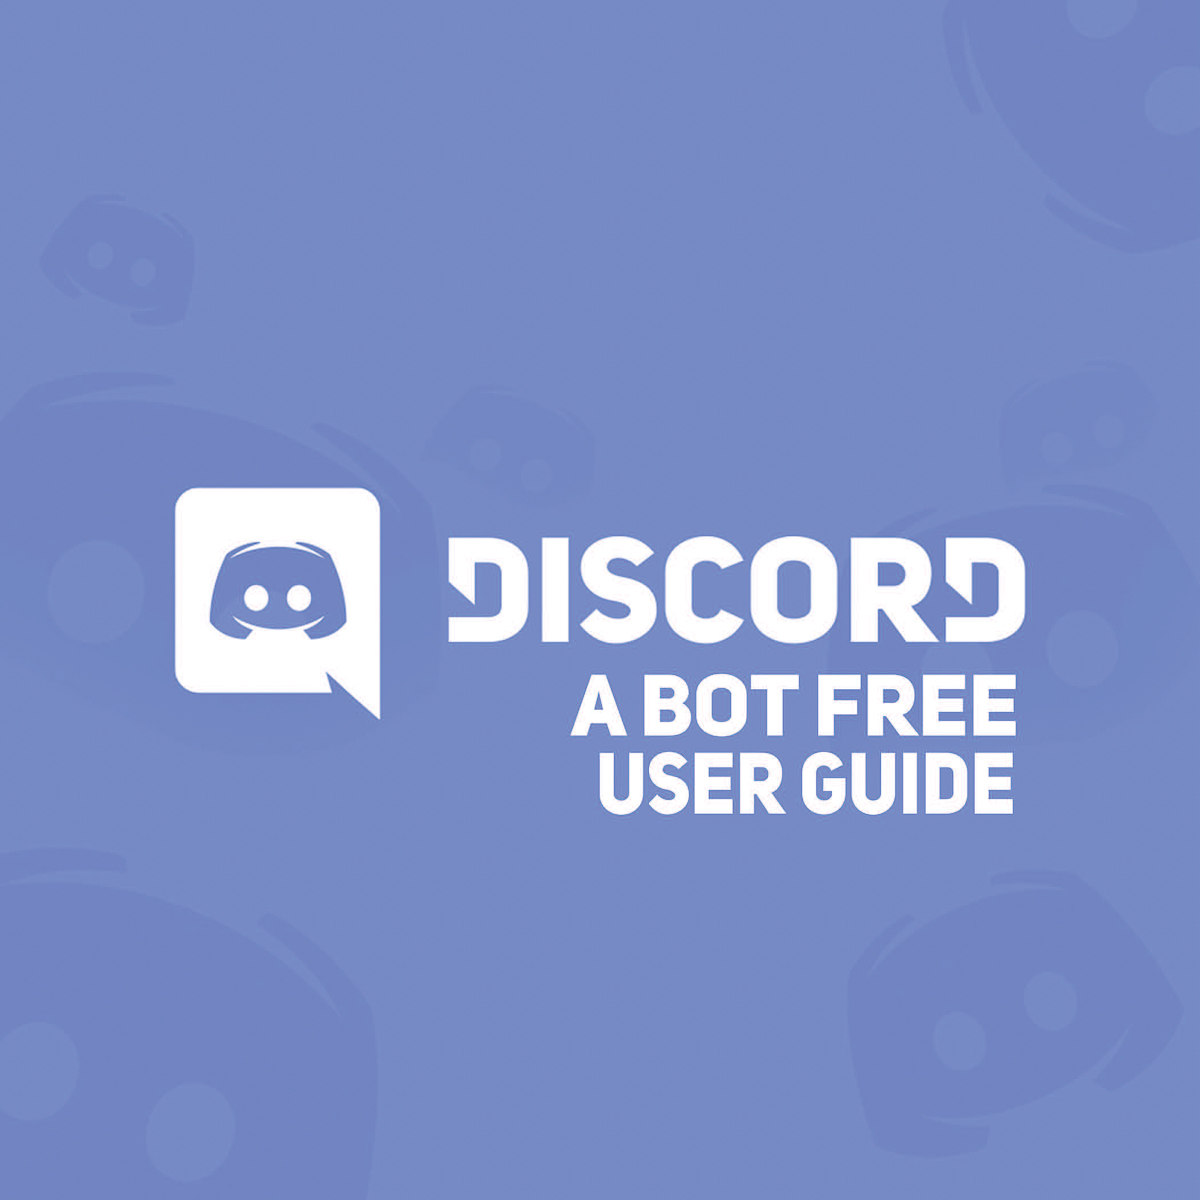 Discord user manual in epub format